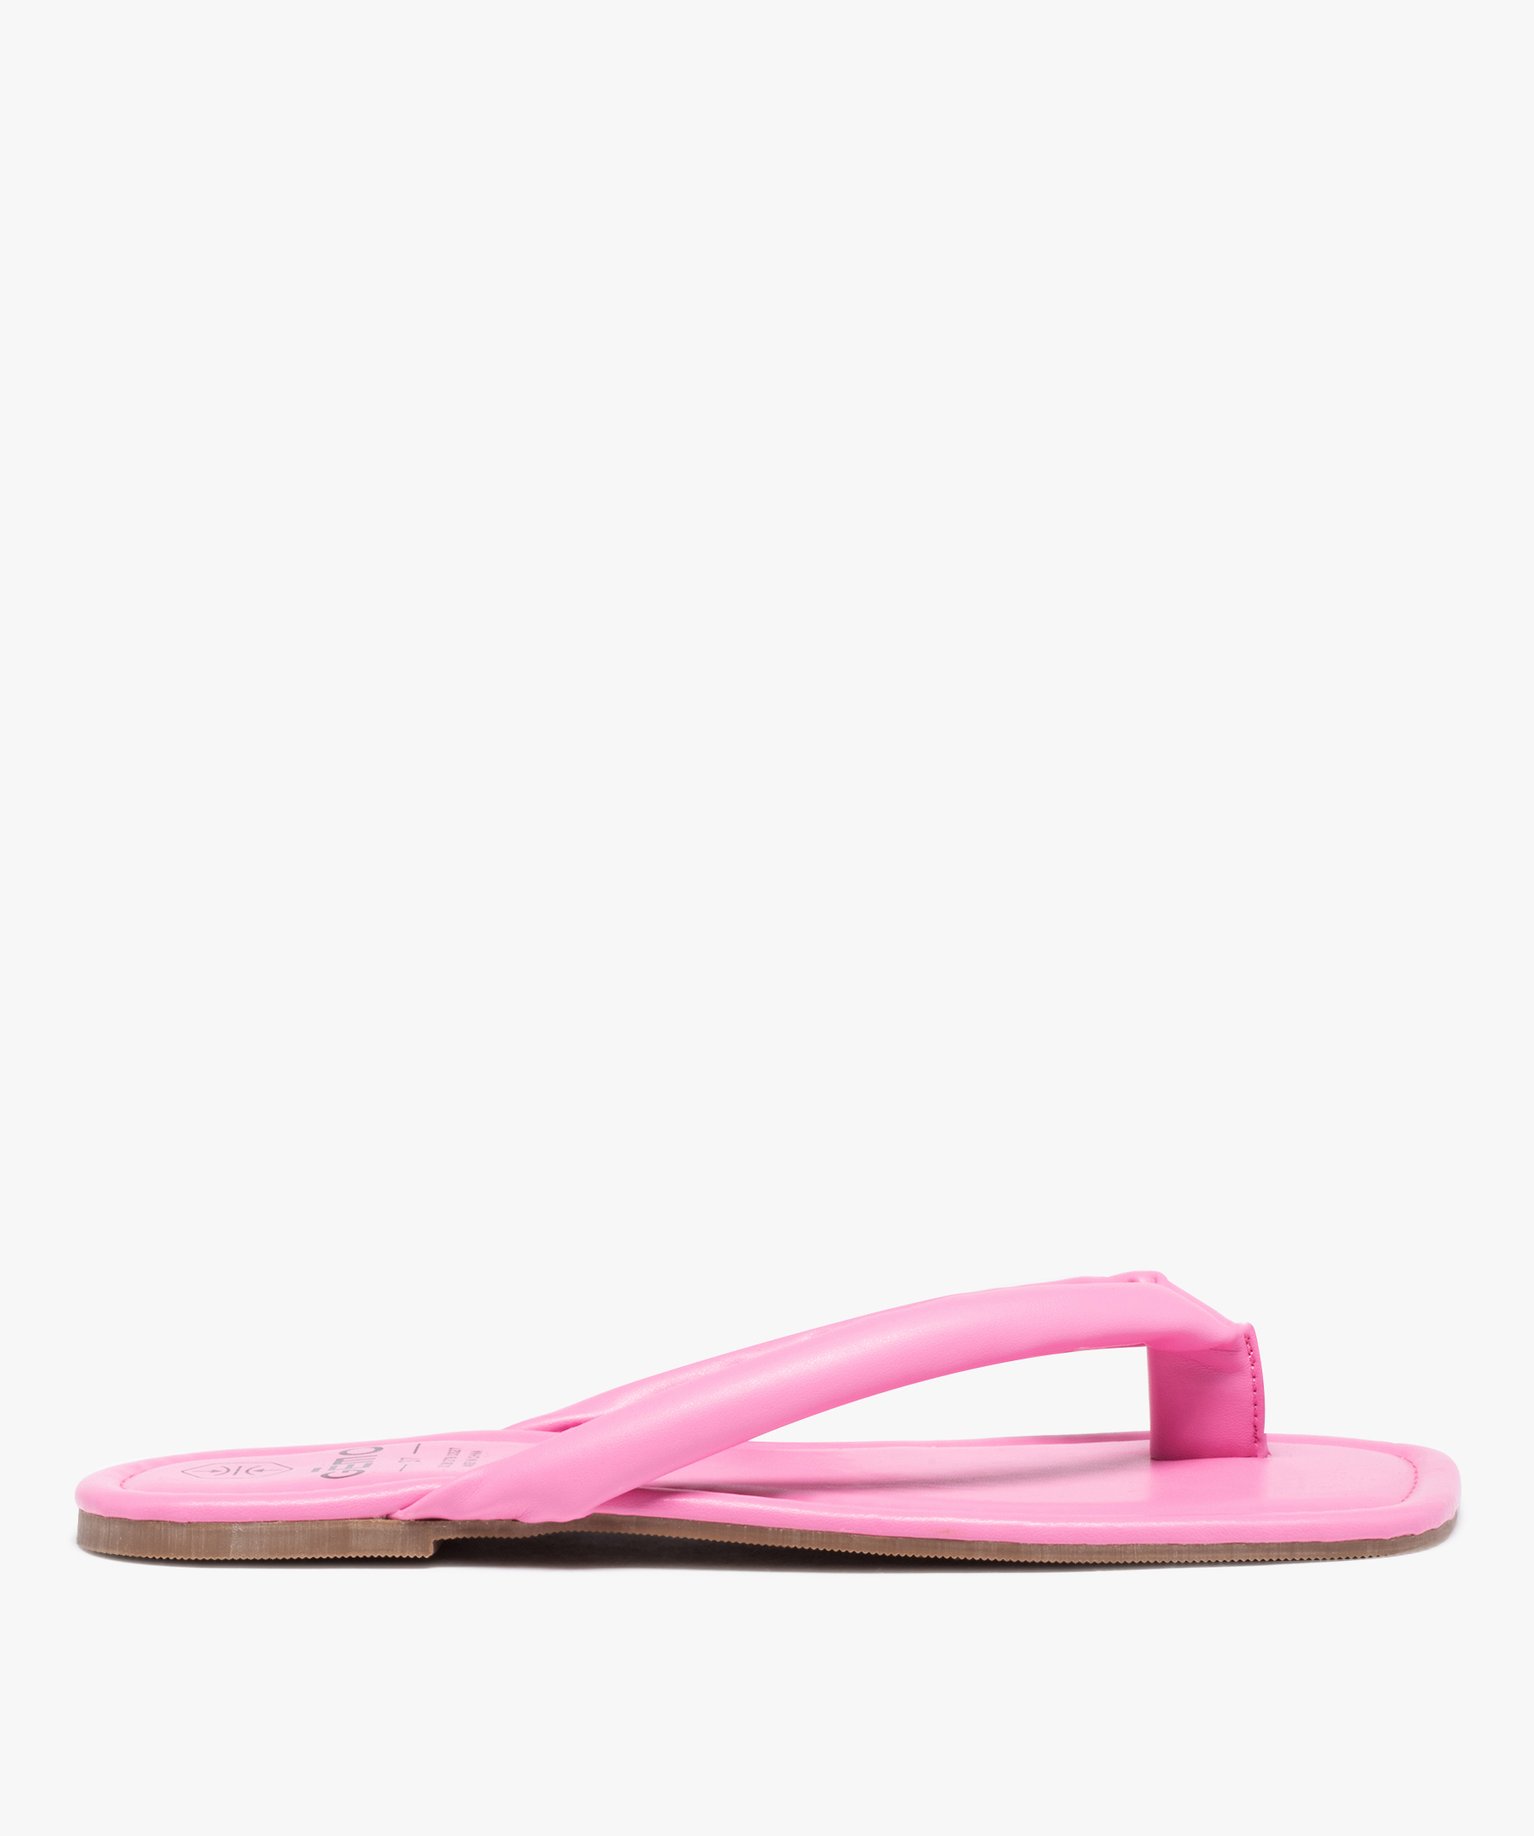 sandales femme a entre-doigts uni matelasse rose sandales plates et nu-pieds